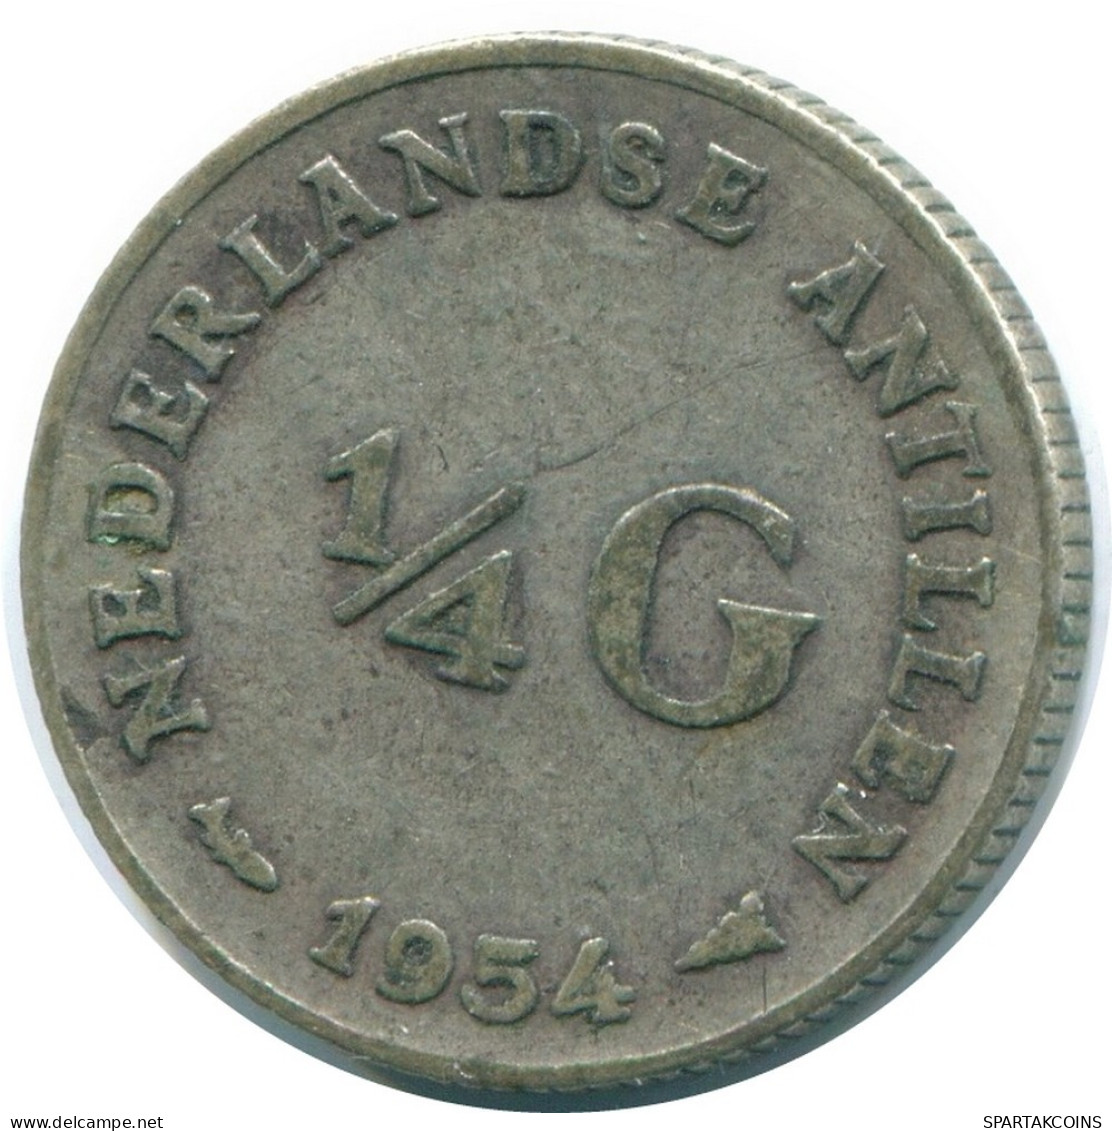 1/4 GULDEN 1954 NETHERLANDS ANTILLES SILVER Colonial Coin #NL10892.4.U.A - Niederländische Antillen